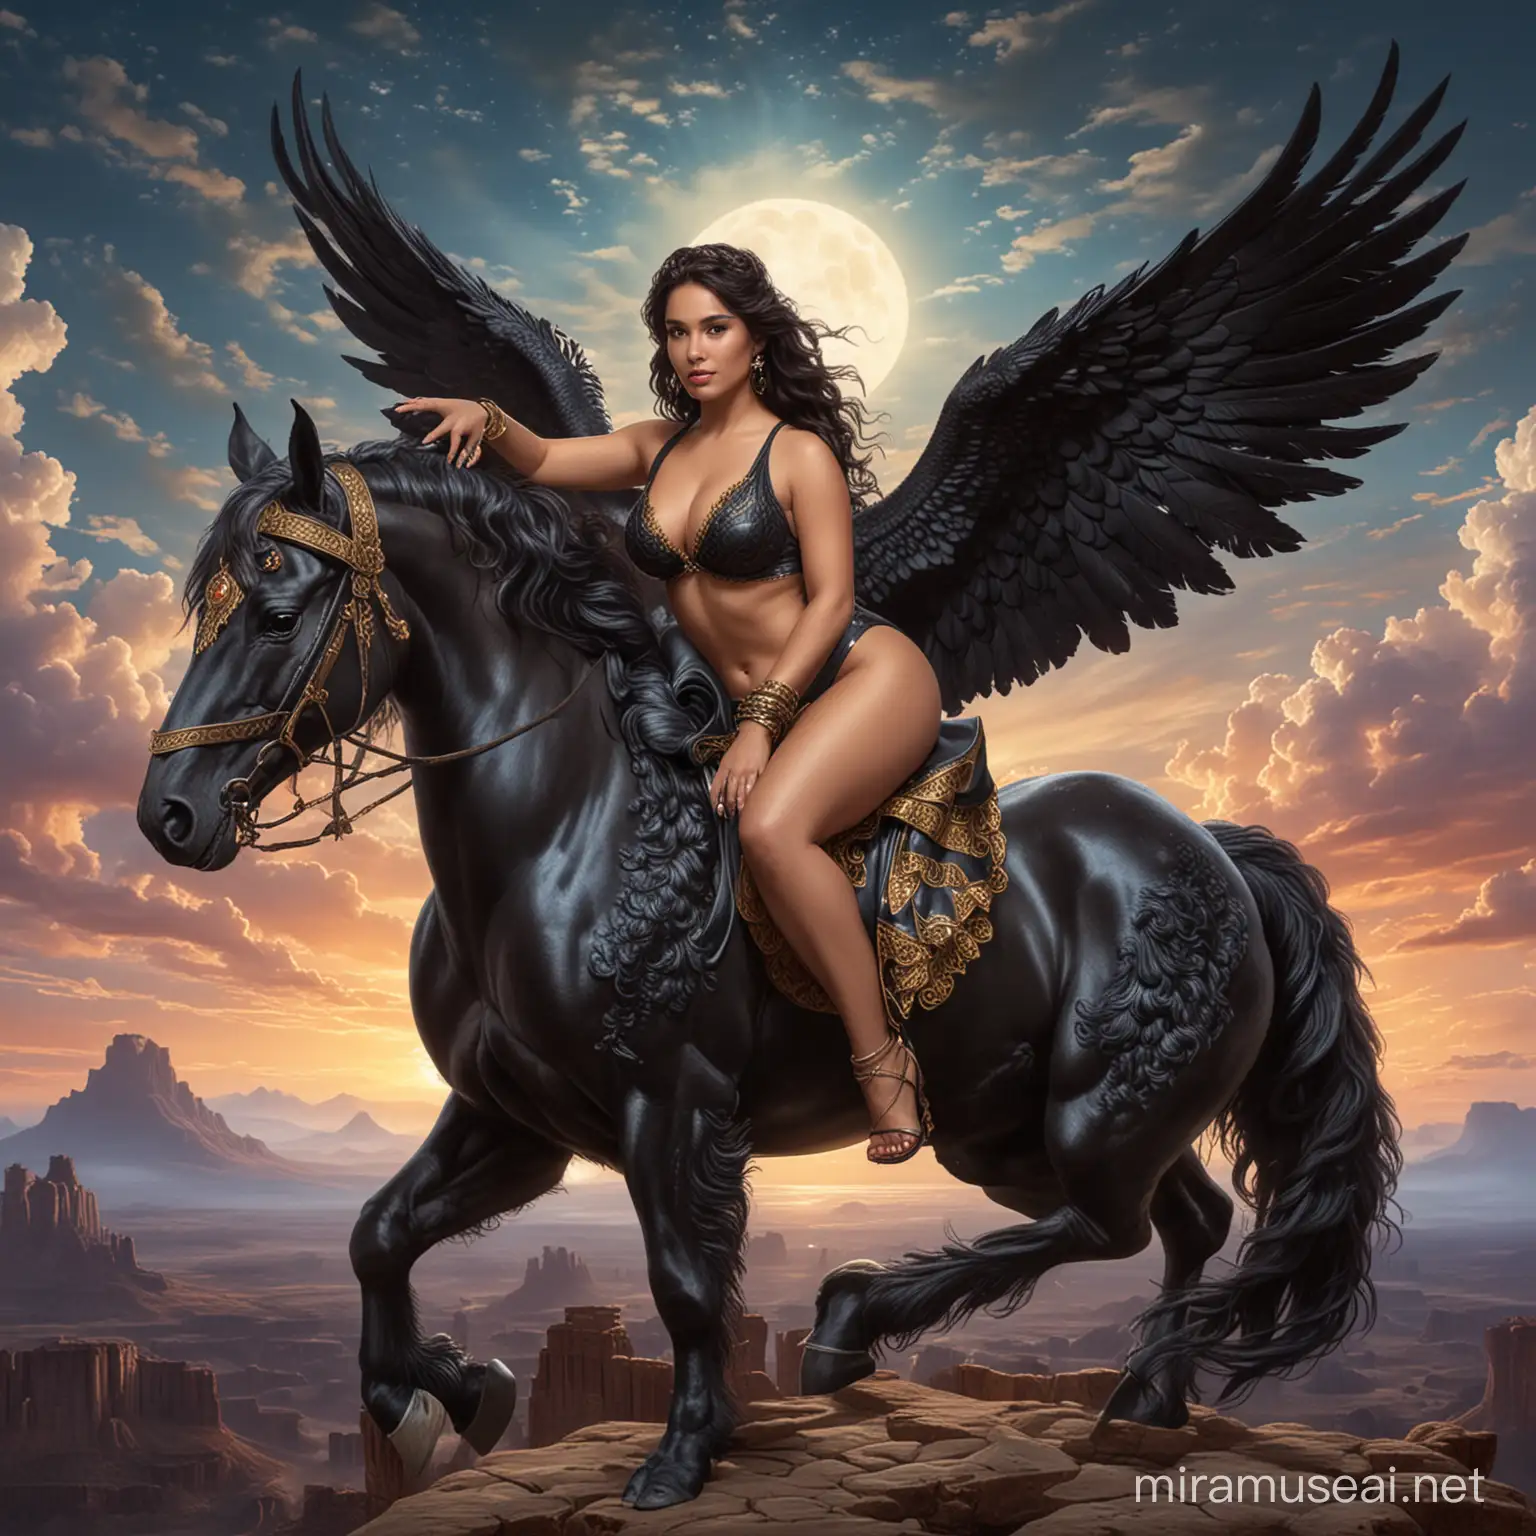 Voluptuous latina goddess, sitting atop a black Pegasus